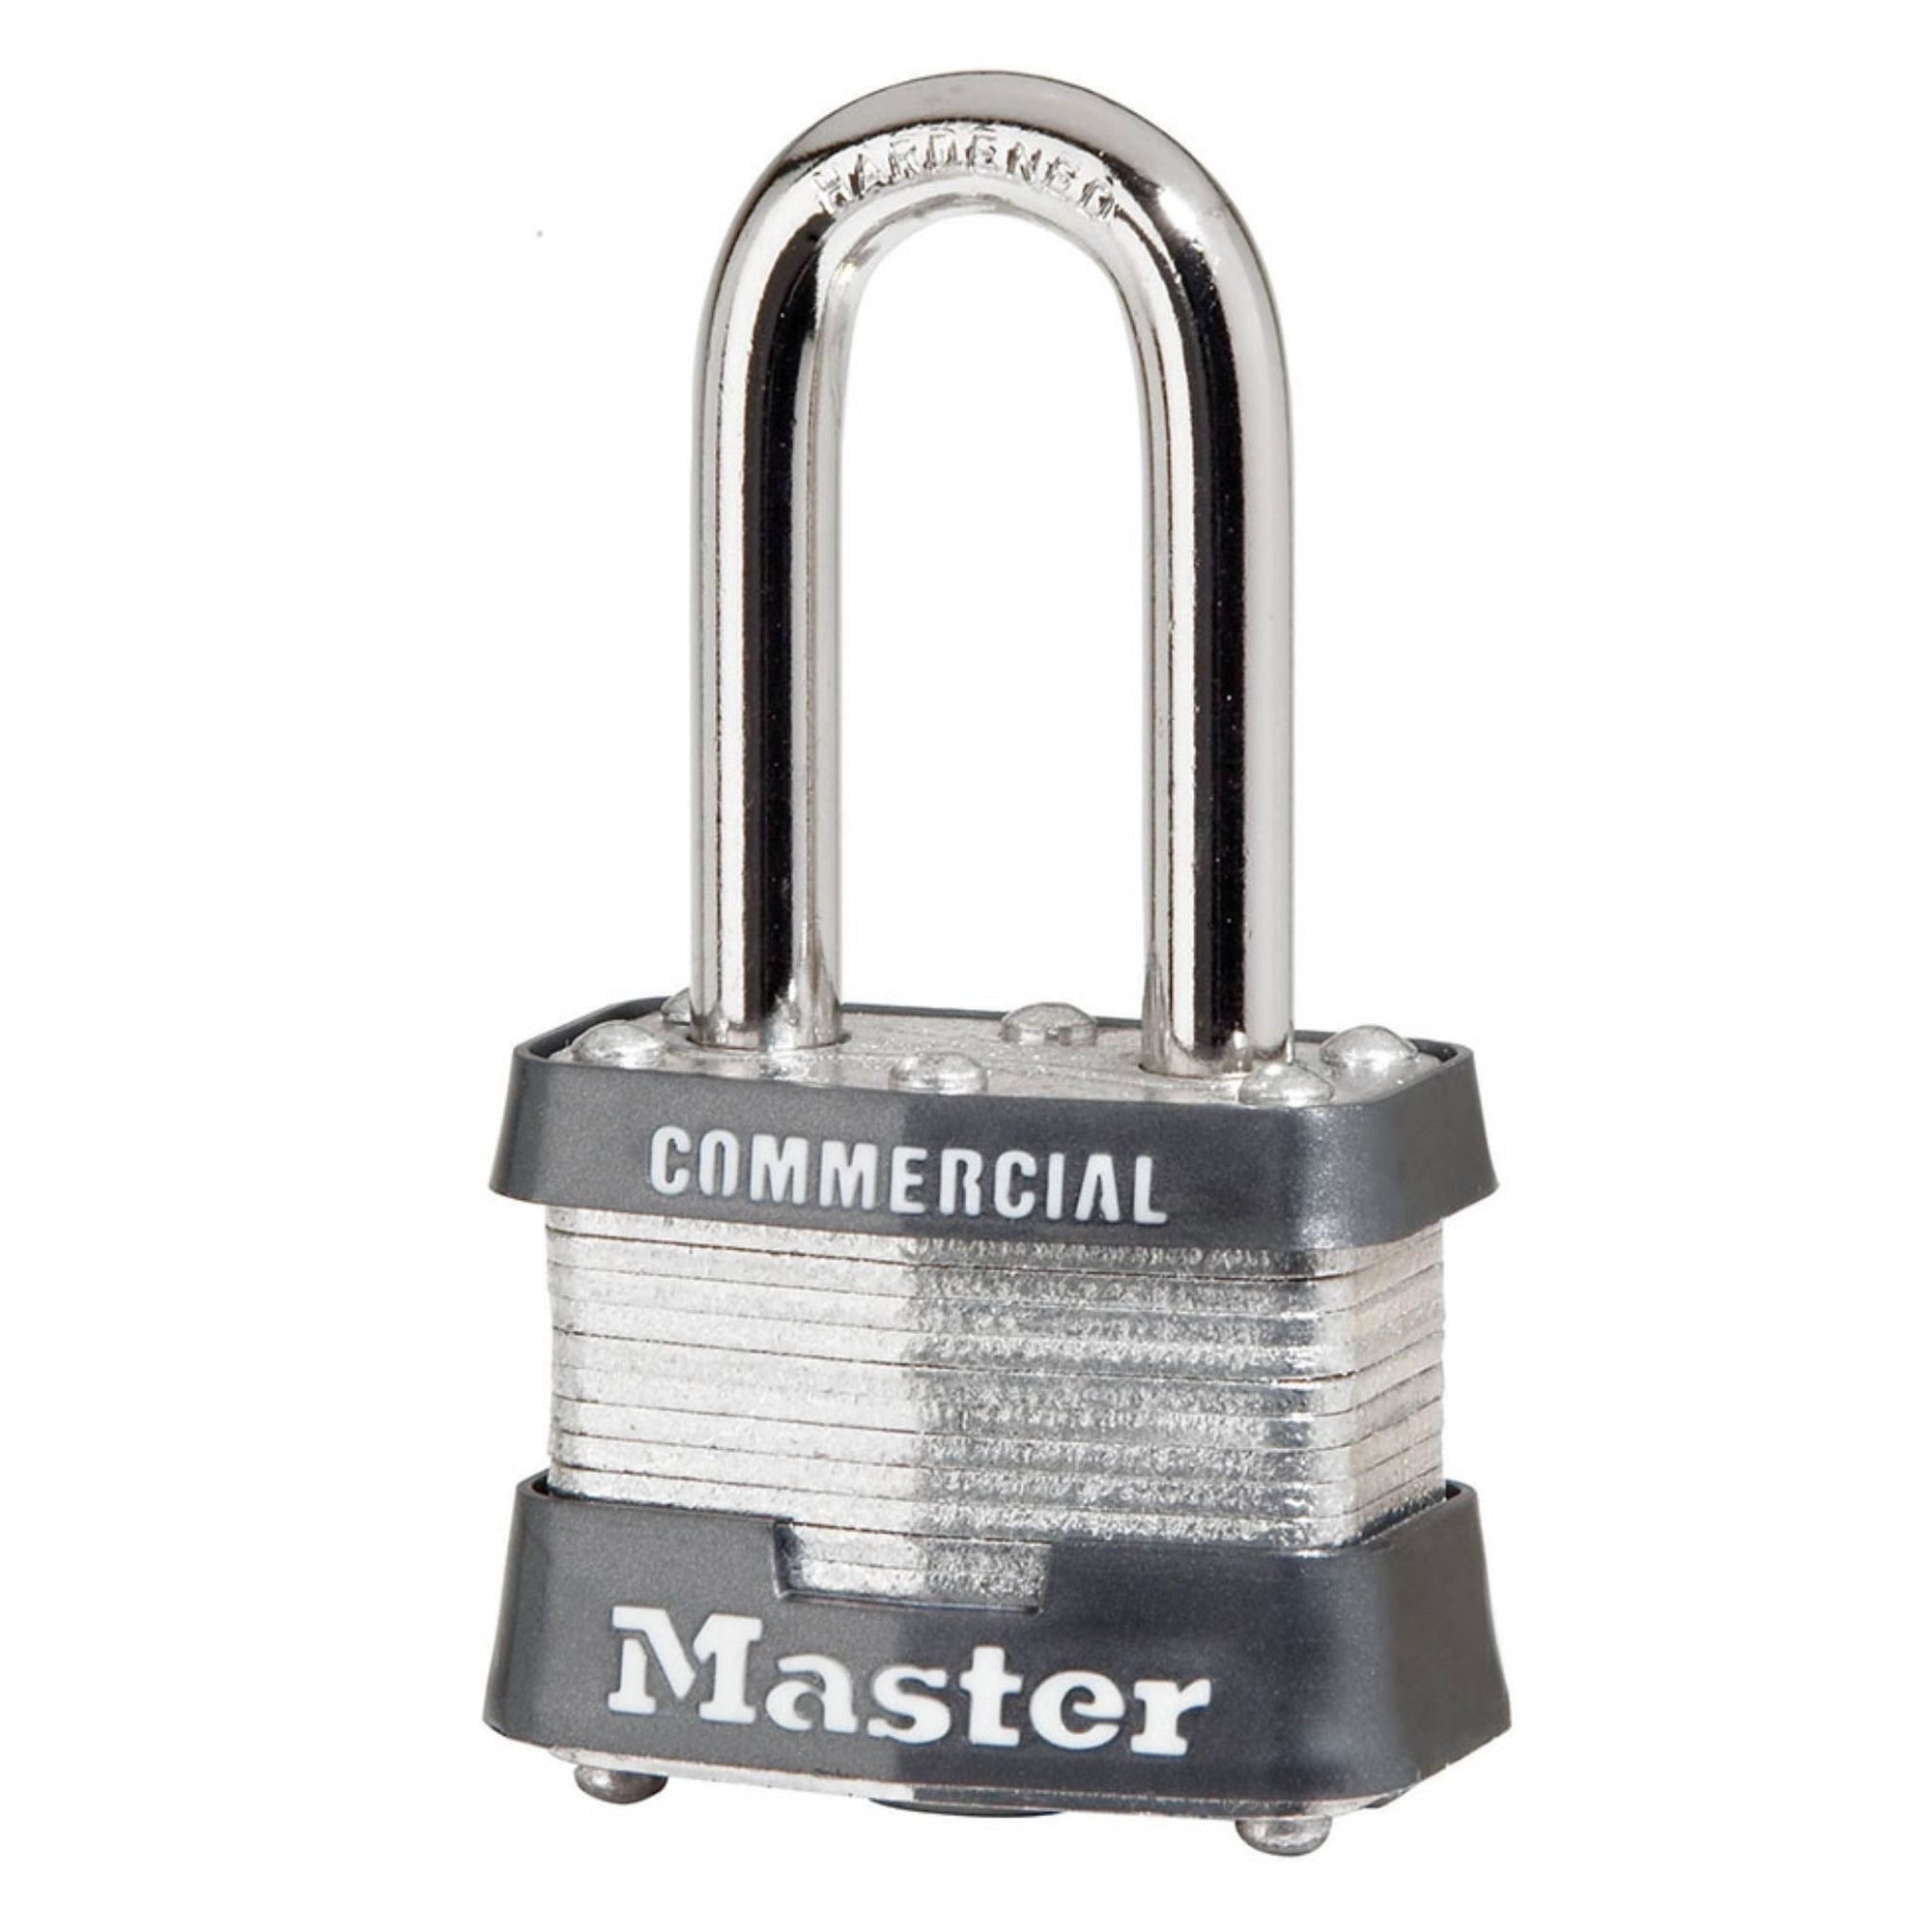 Master Lock 3KALF 2246 Locks Set-of-6 Padlocks Keyed Alike to Match Key Number KA2246 with 1.5-Inch Shackle - The Lock Source